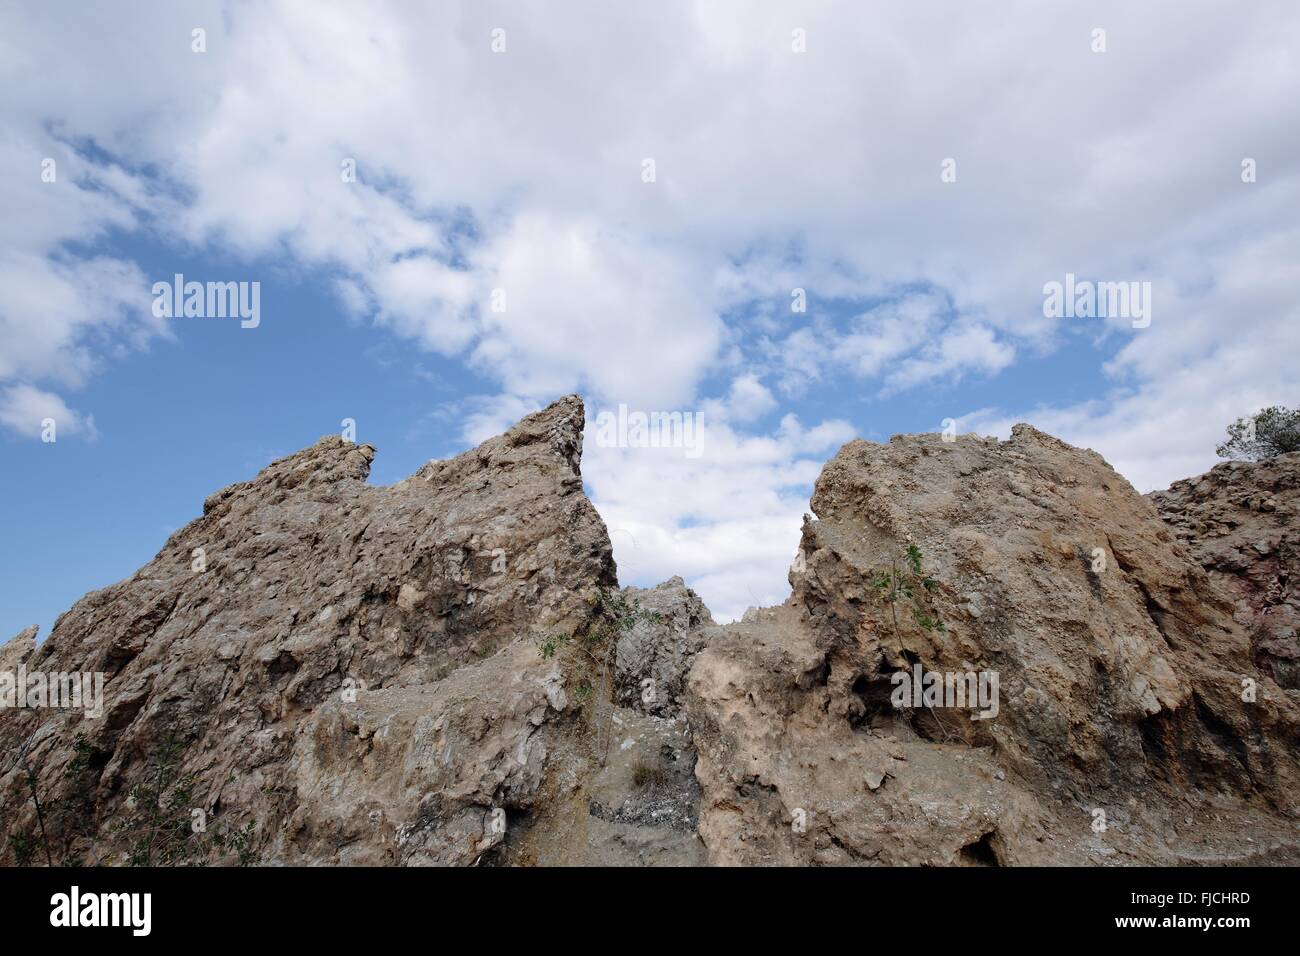 Rocky Mountains in Aspe, Alicante, Spain Stock Photo